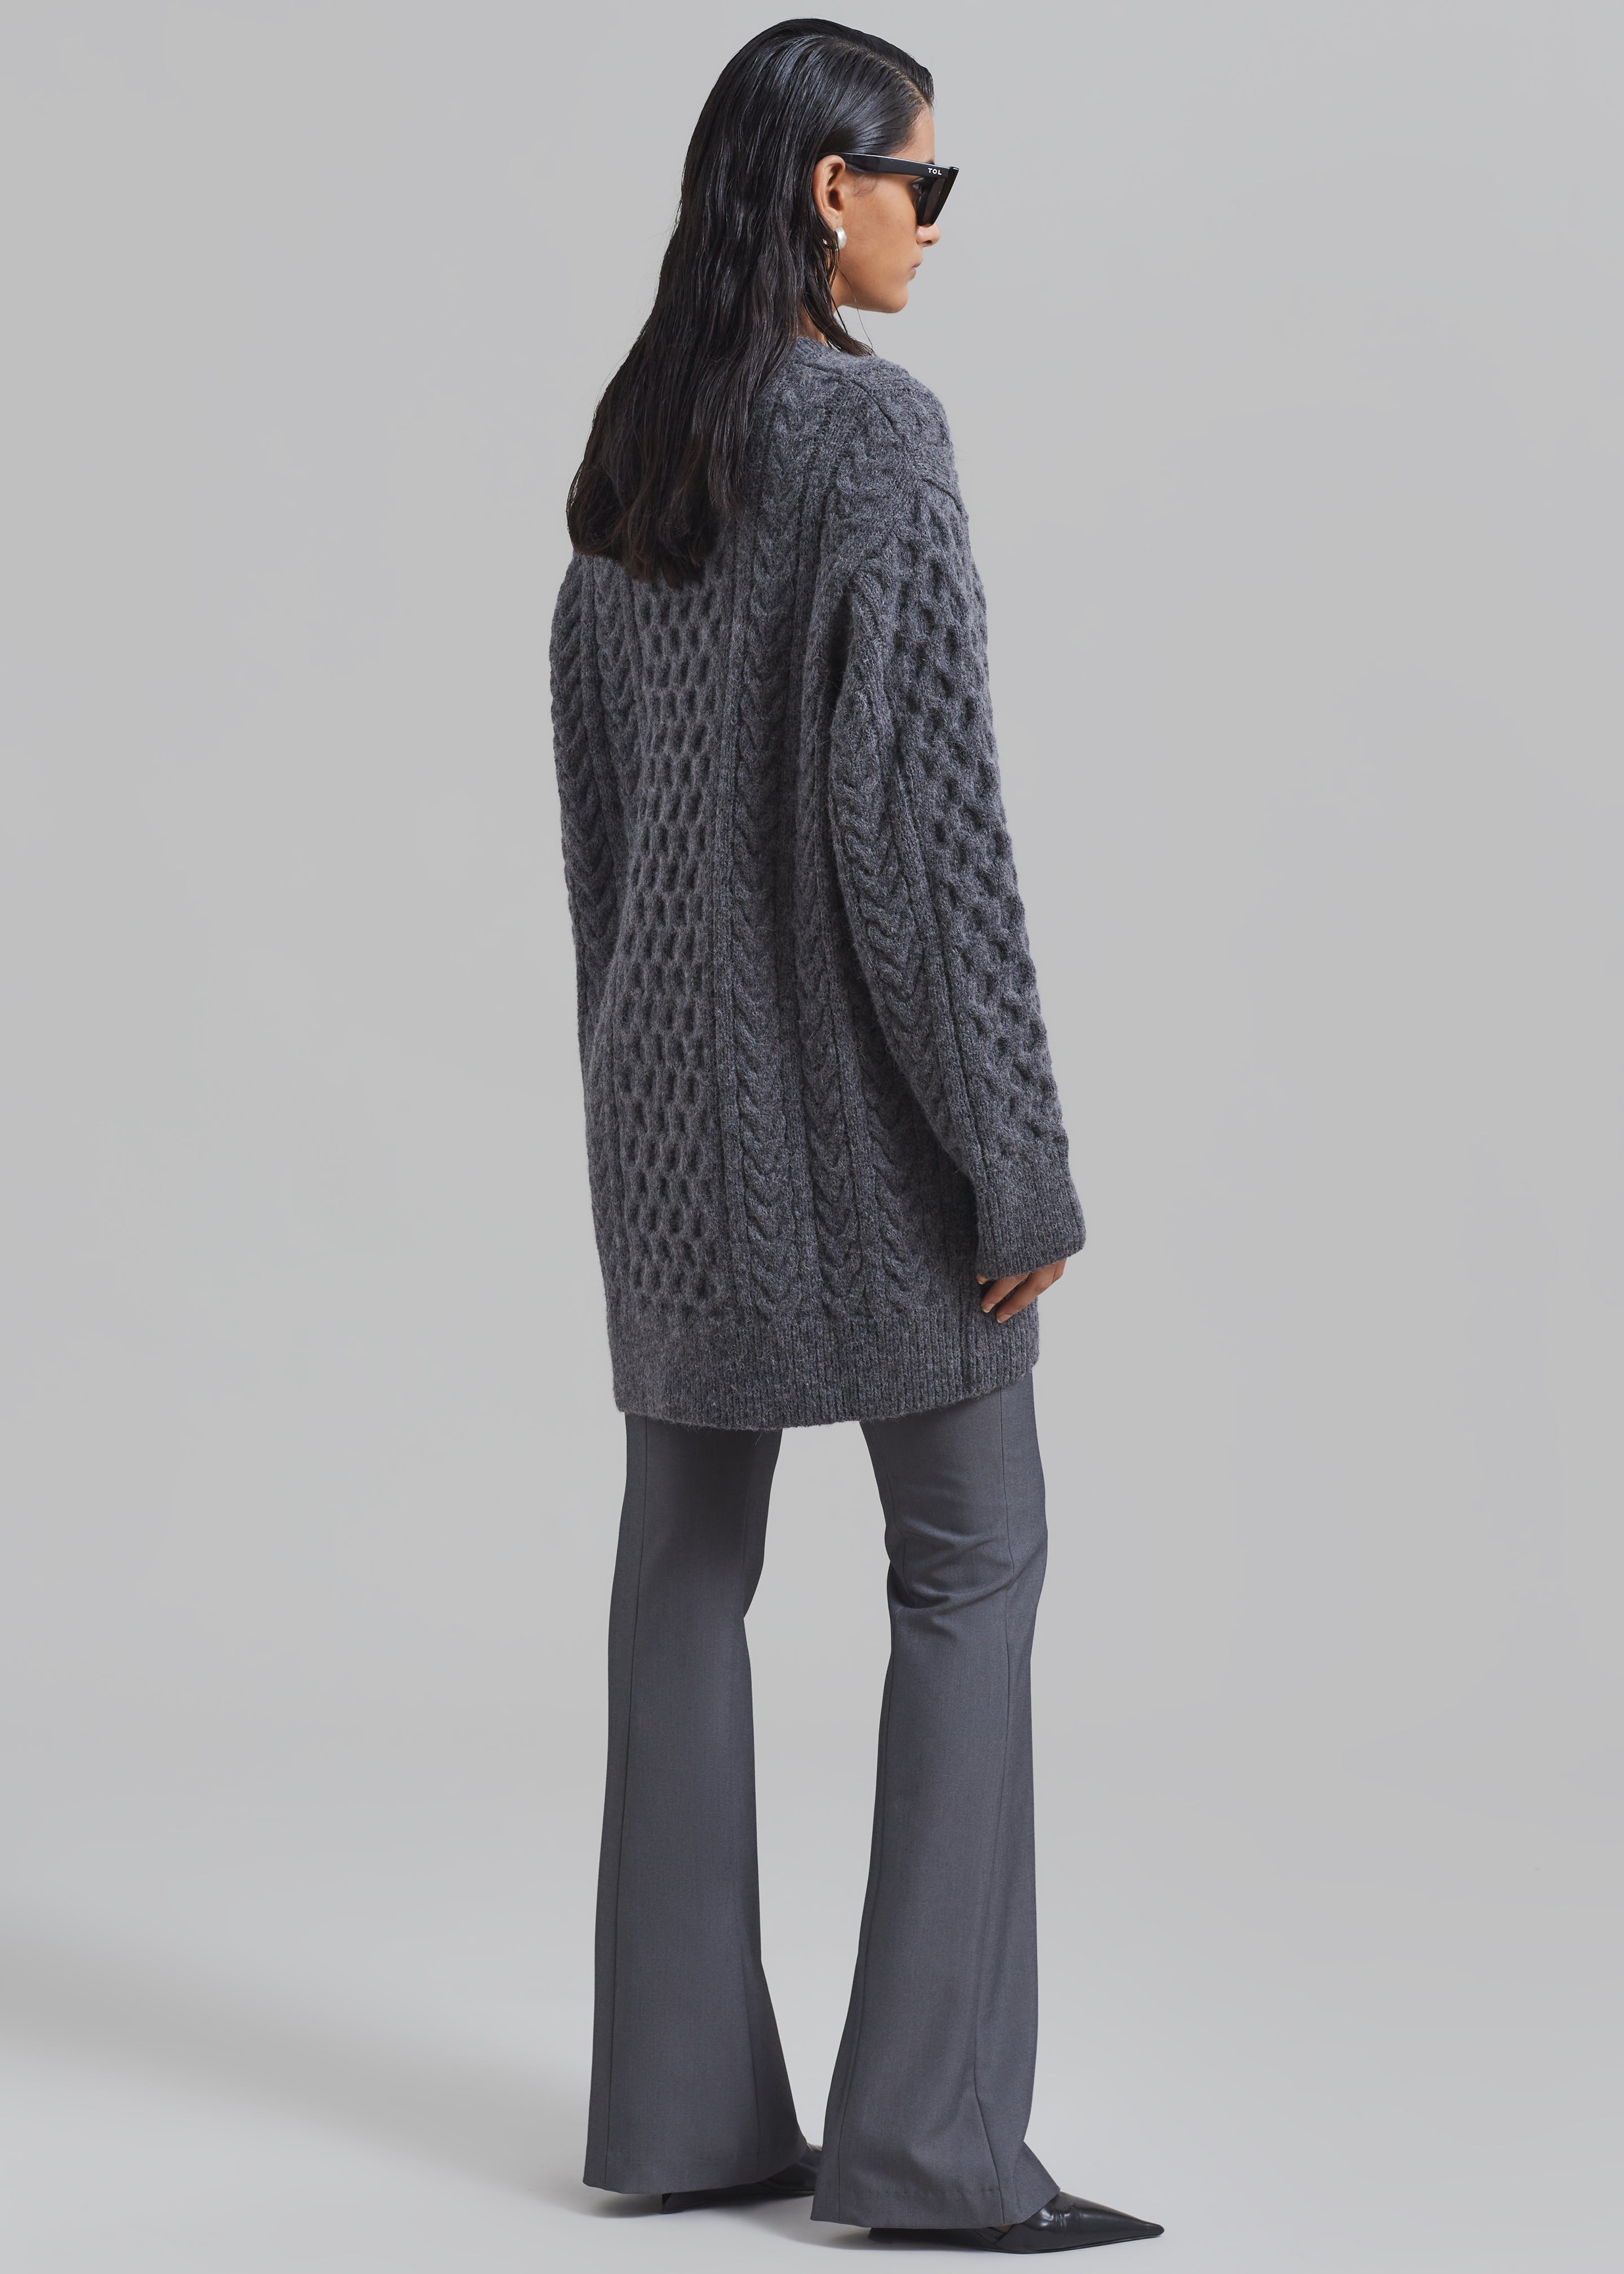 Leighton Braided Knit Sweater - Grey - 6